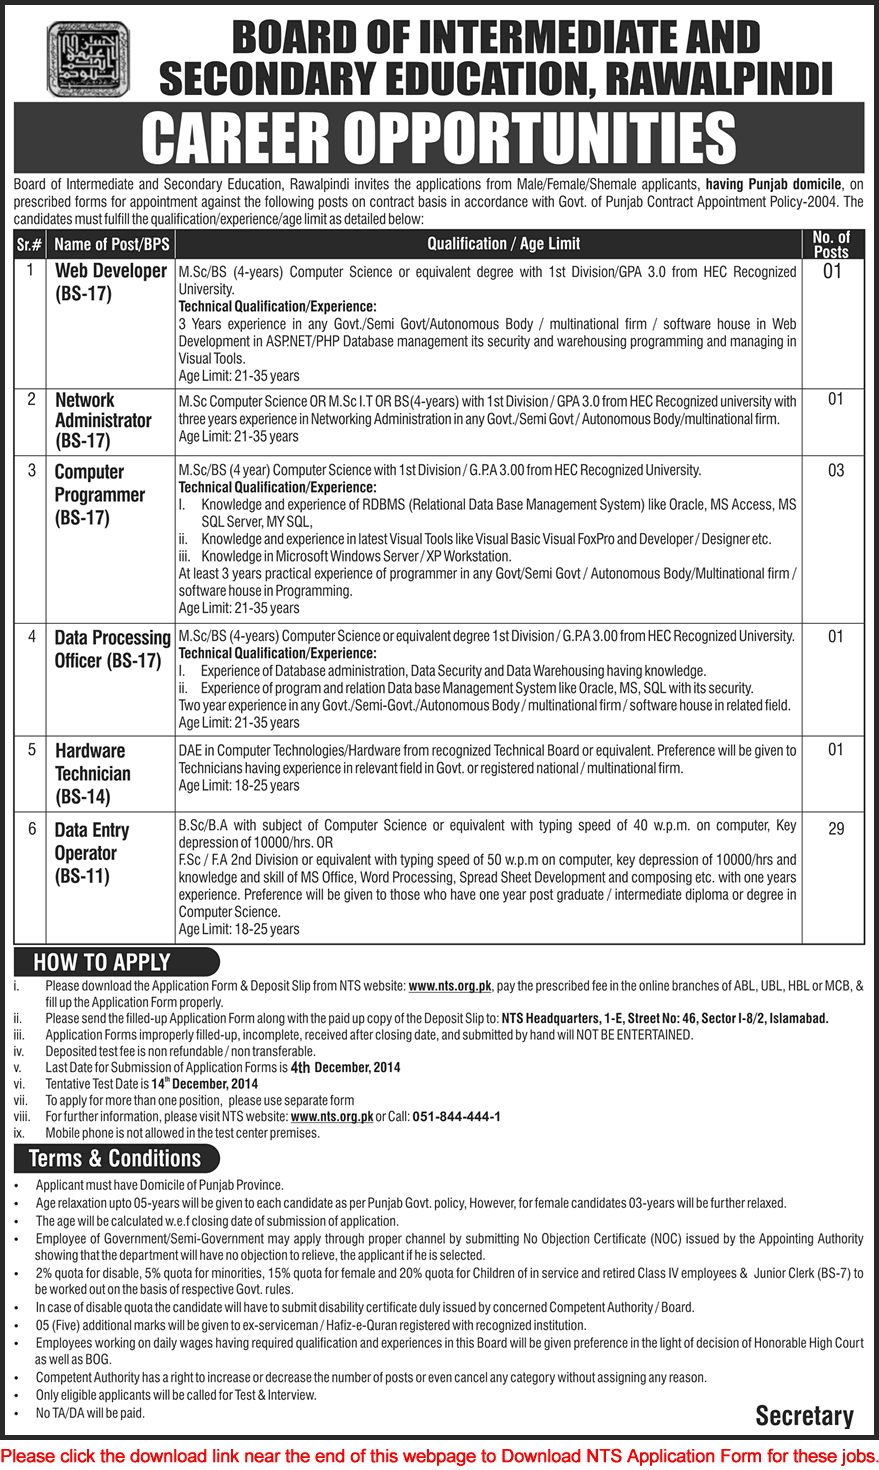 BISE Rawalpindi Jobs November 2014 Board of Intermediate and Secondary Education